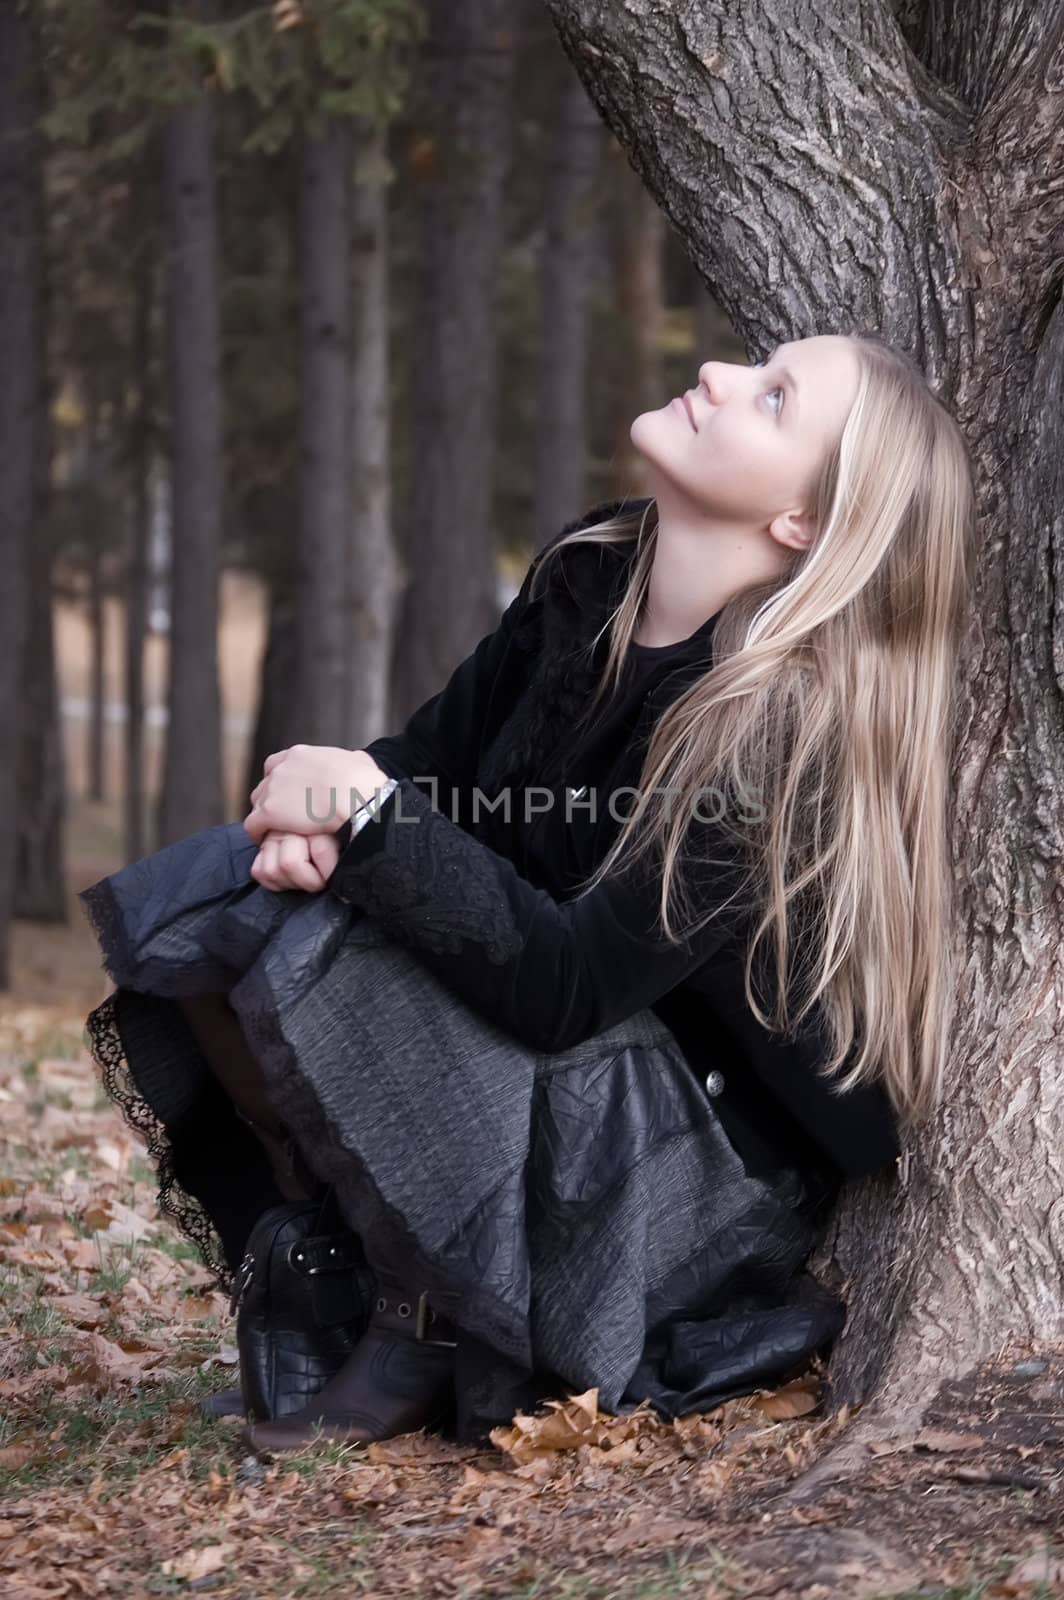 The girl at a tree by Pospelova